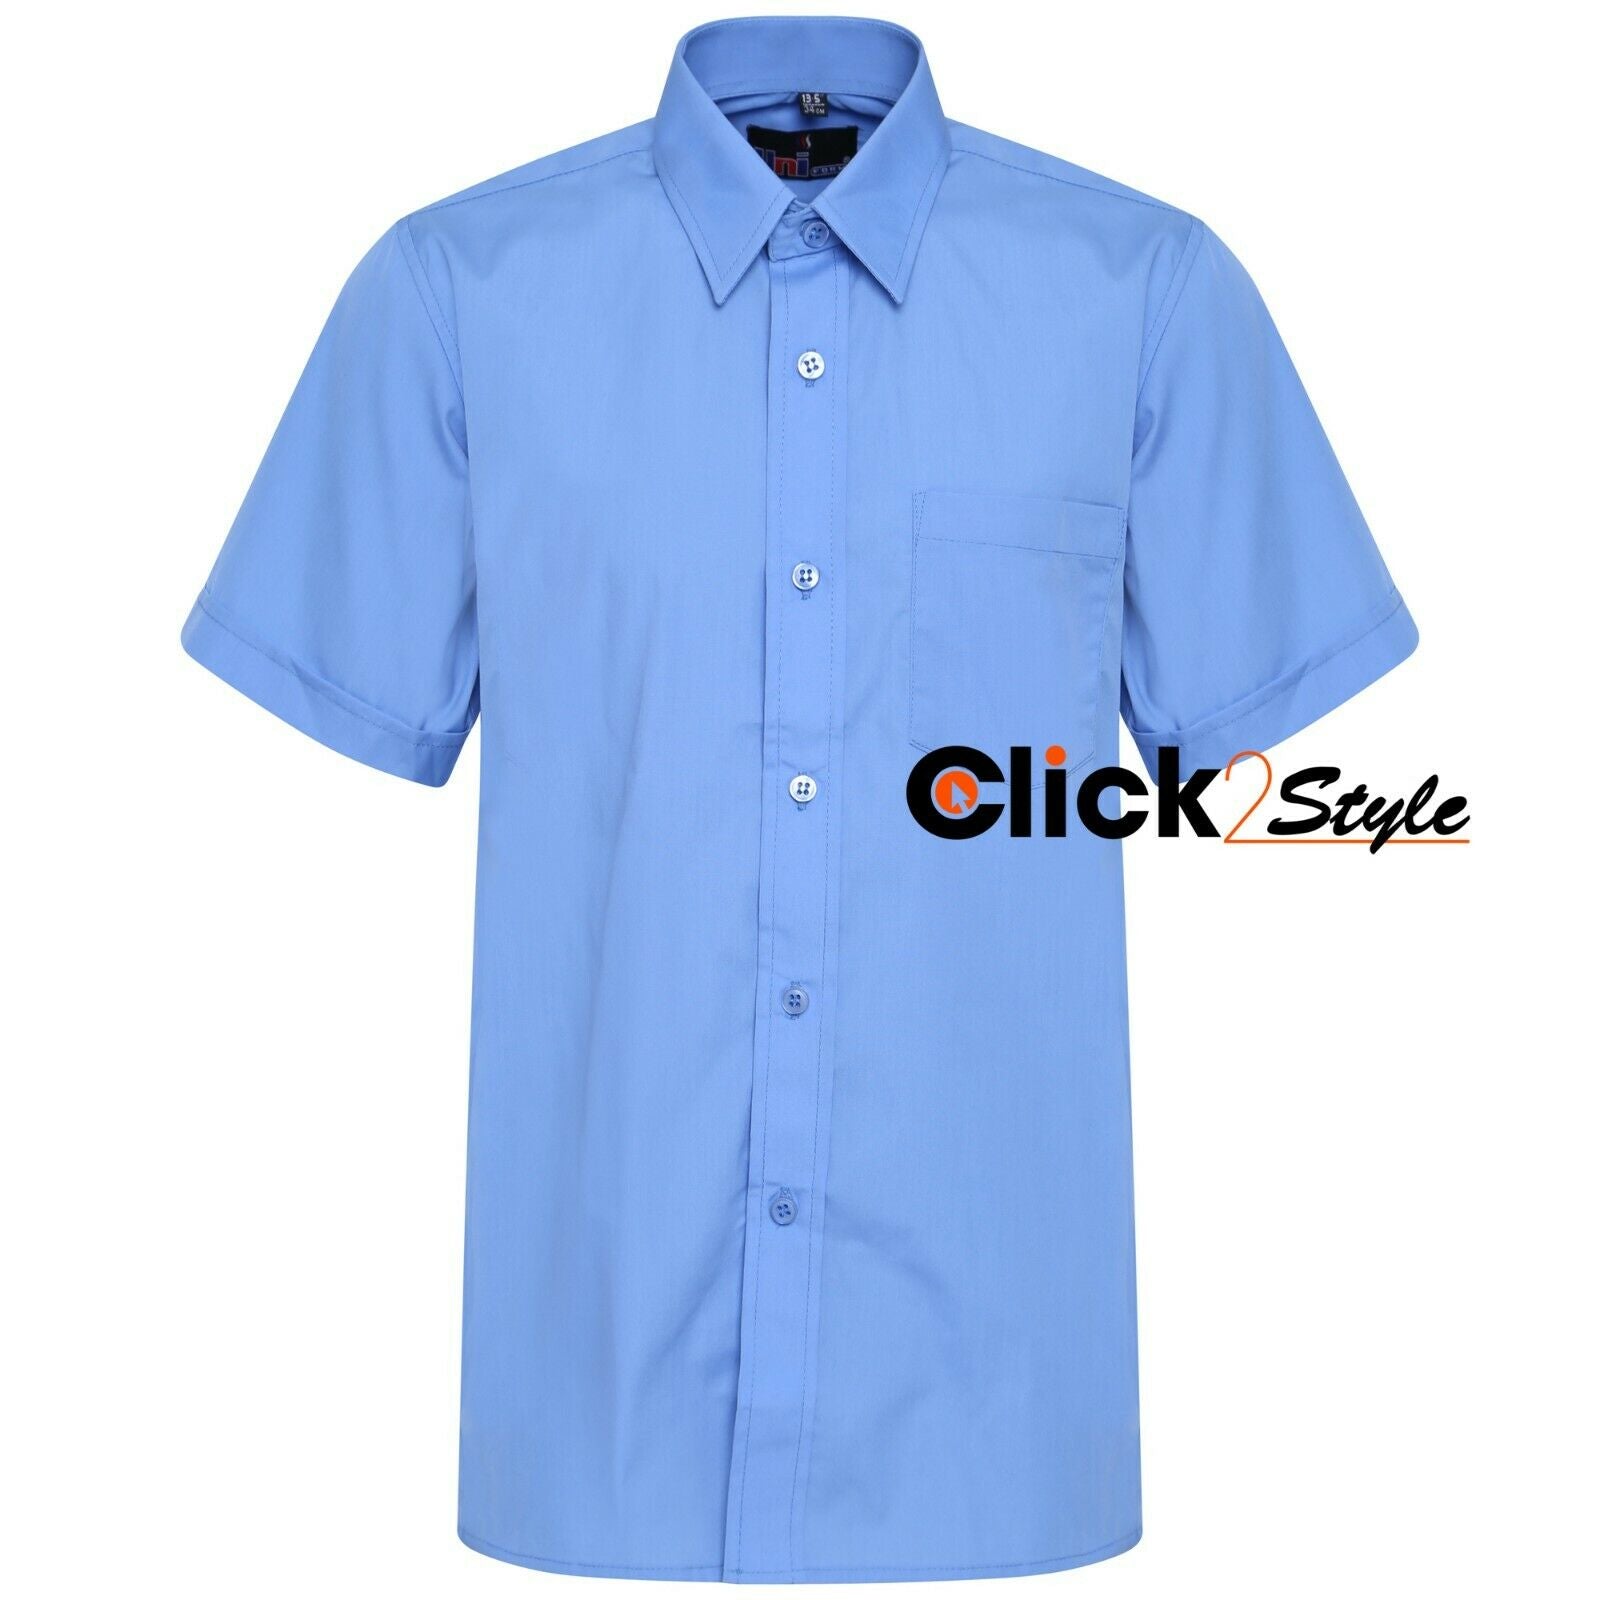 Boys Children Kids School Uniform Shirt Short Sleeve Blue Colour